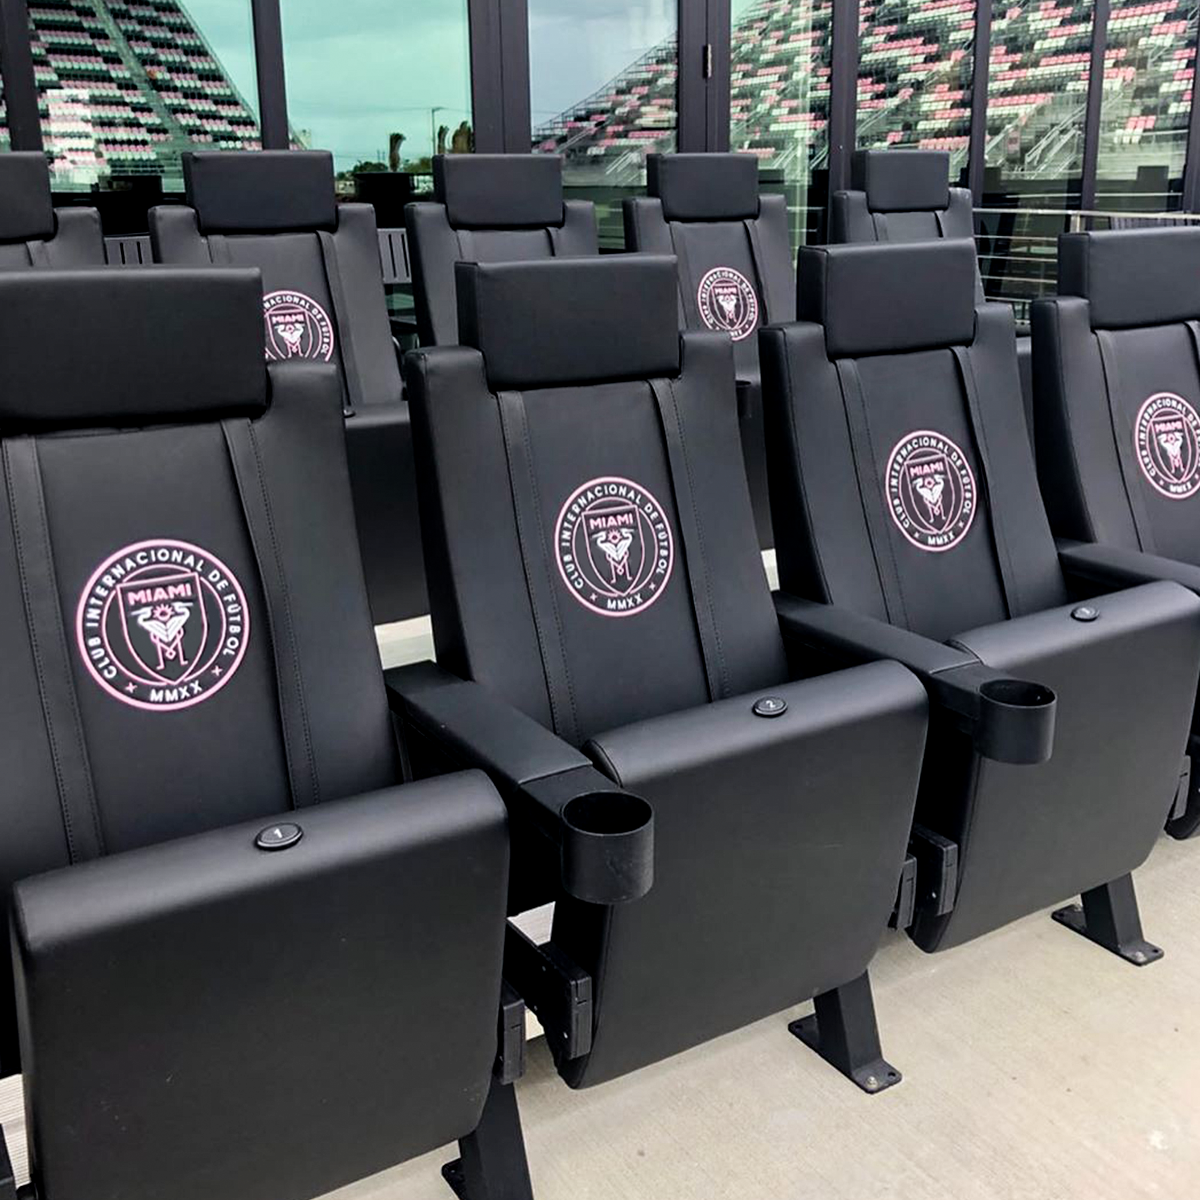 SuiteMax 3.5 VIP Seats with Atlanta United FC Wordmark Logo